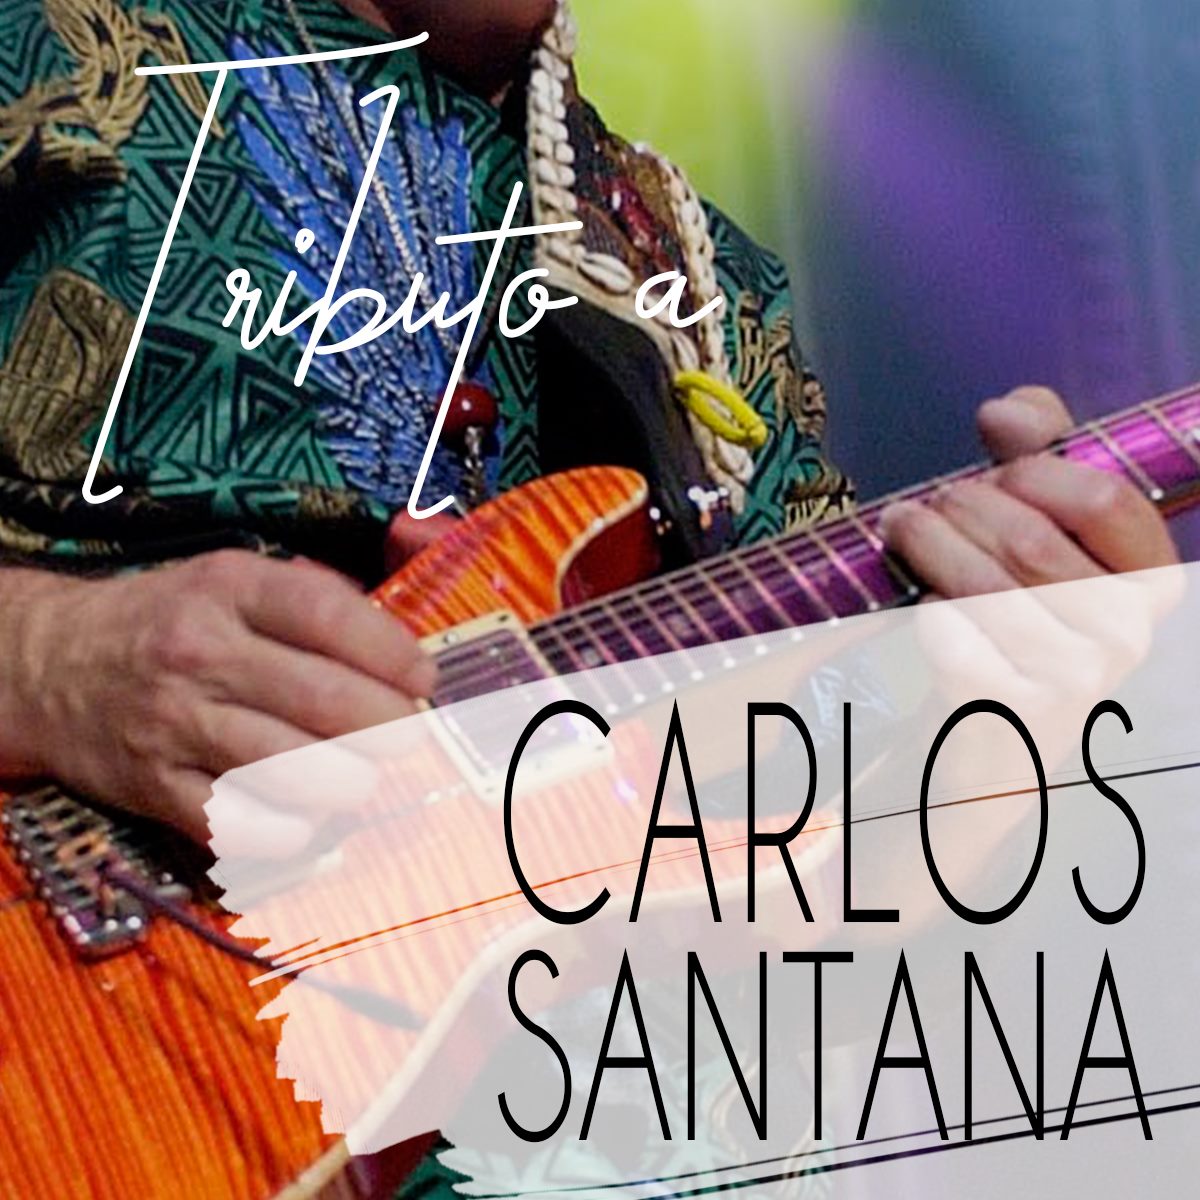 Tributo a Carlos Santana